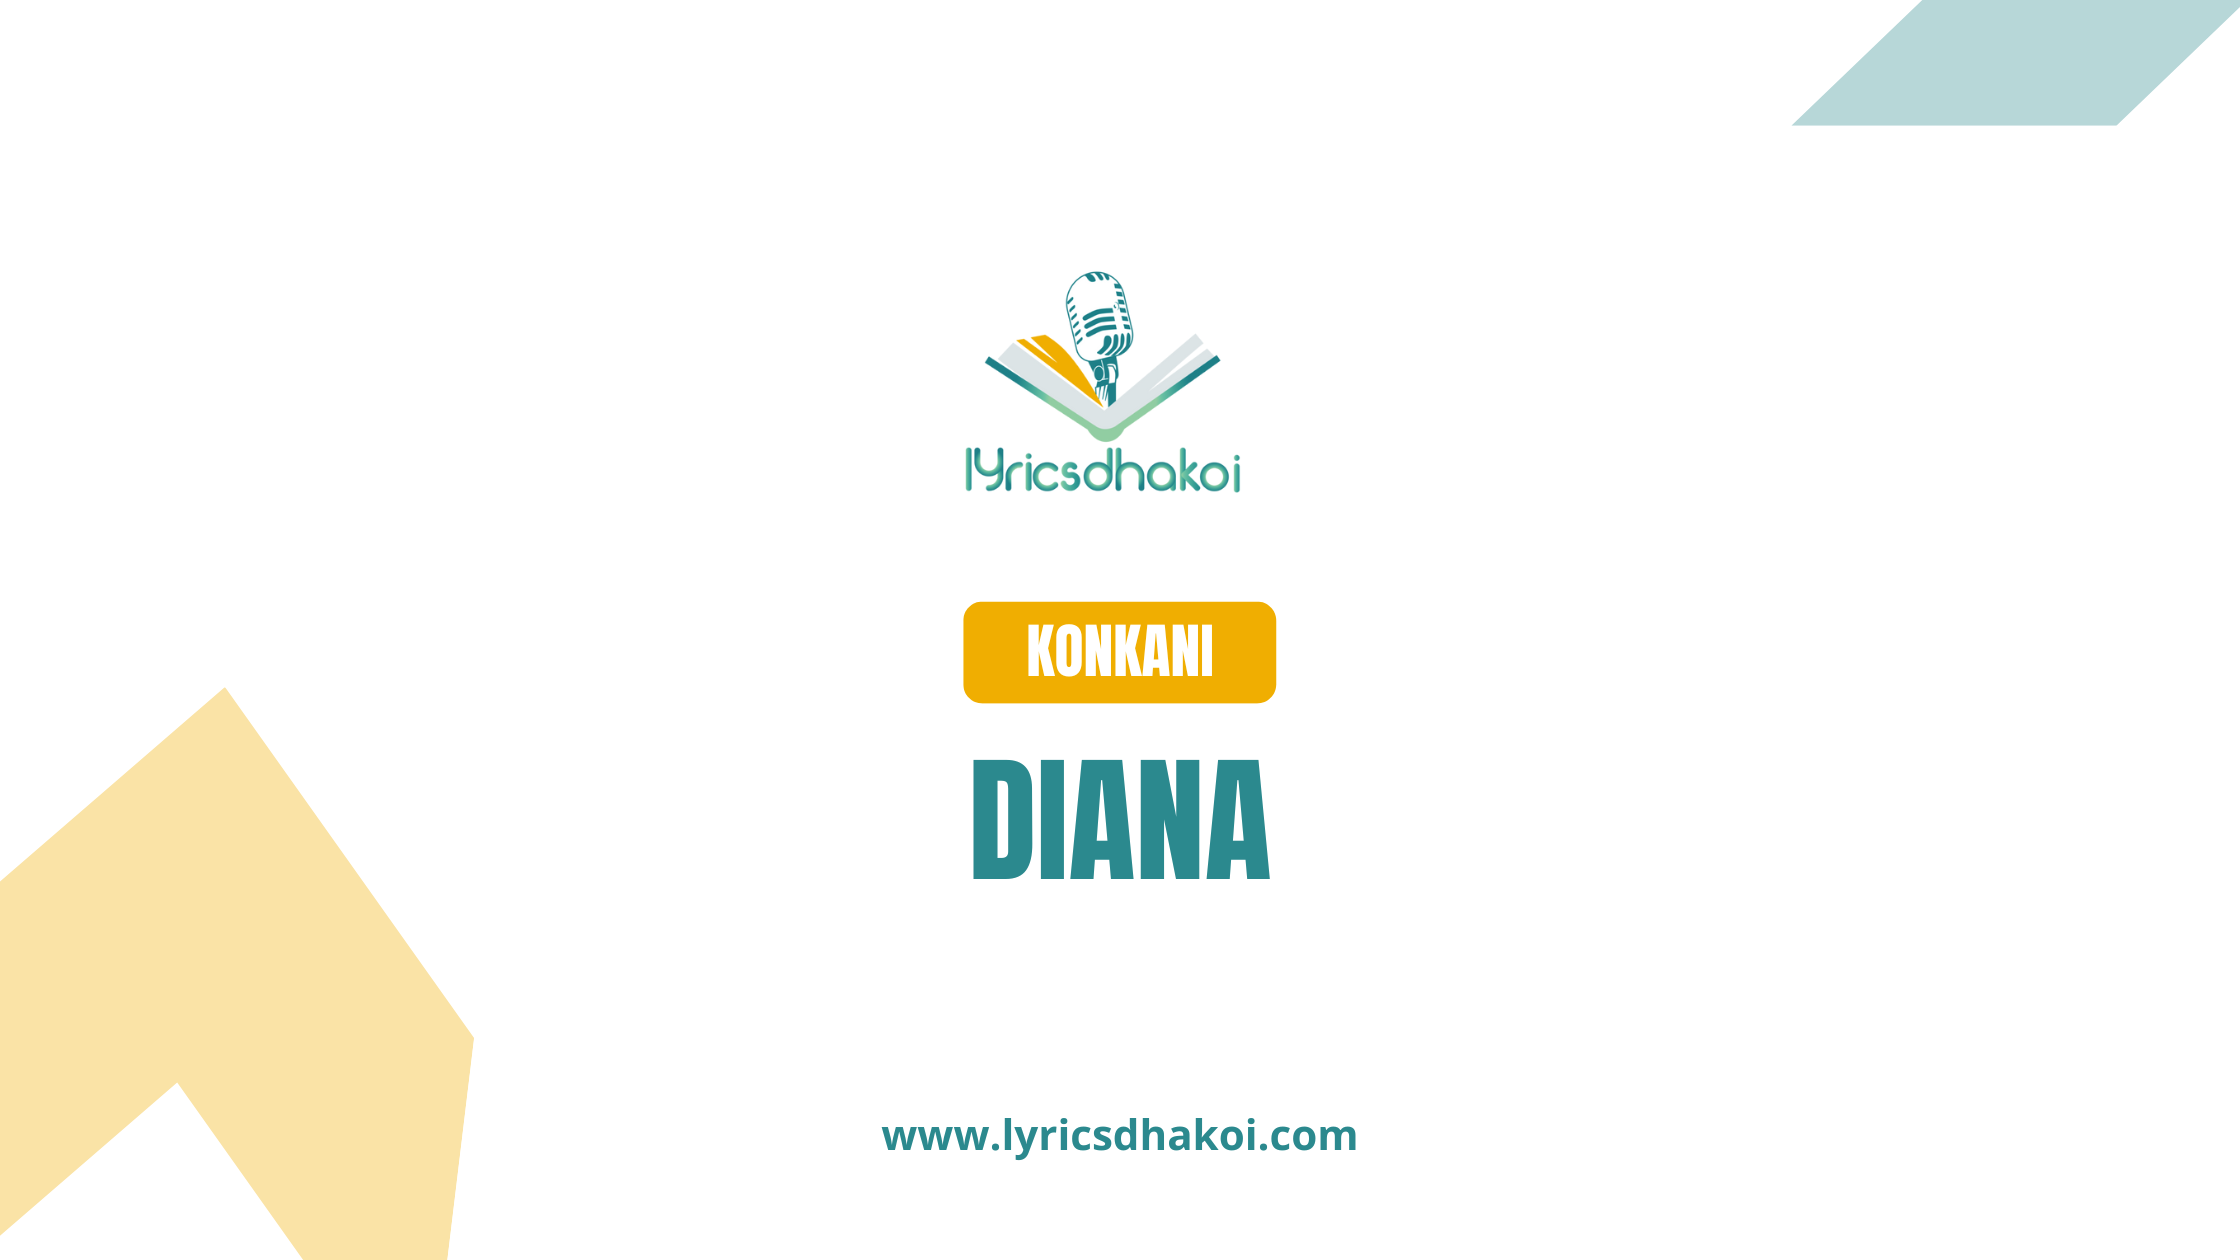 Diana Konkani Lyrics for Karaoke Online - LyricsDhakoi.com